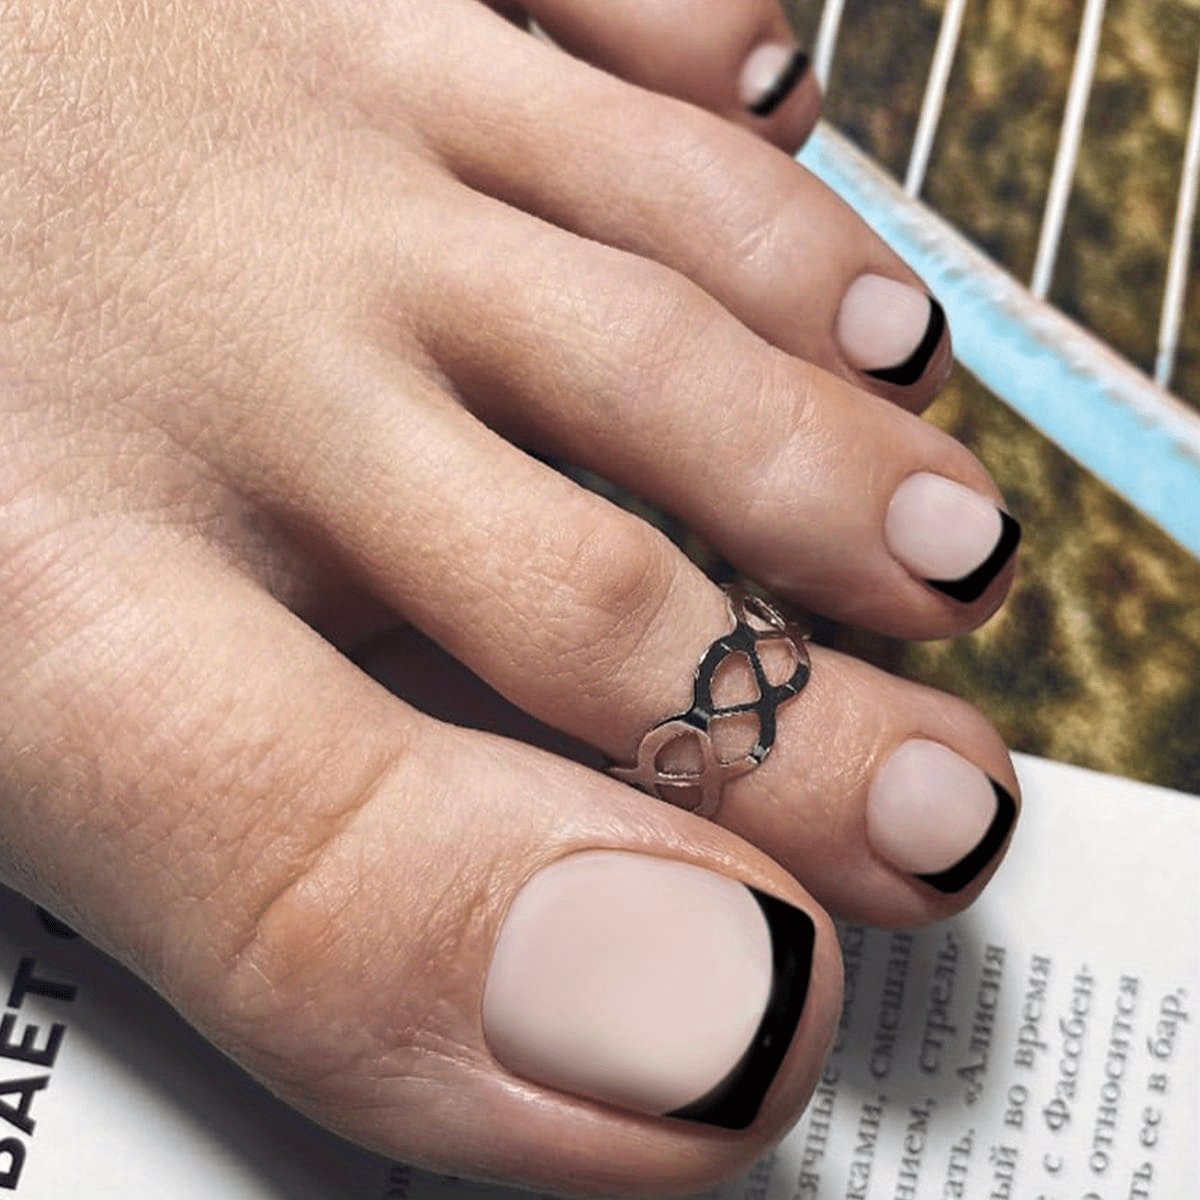 24Pcs False Toe Nails With Glue Summer Simple Wearing Fake Nails